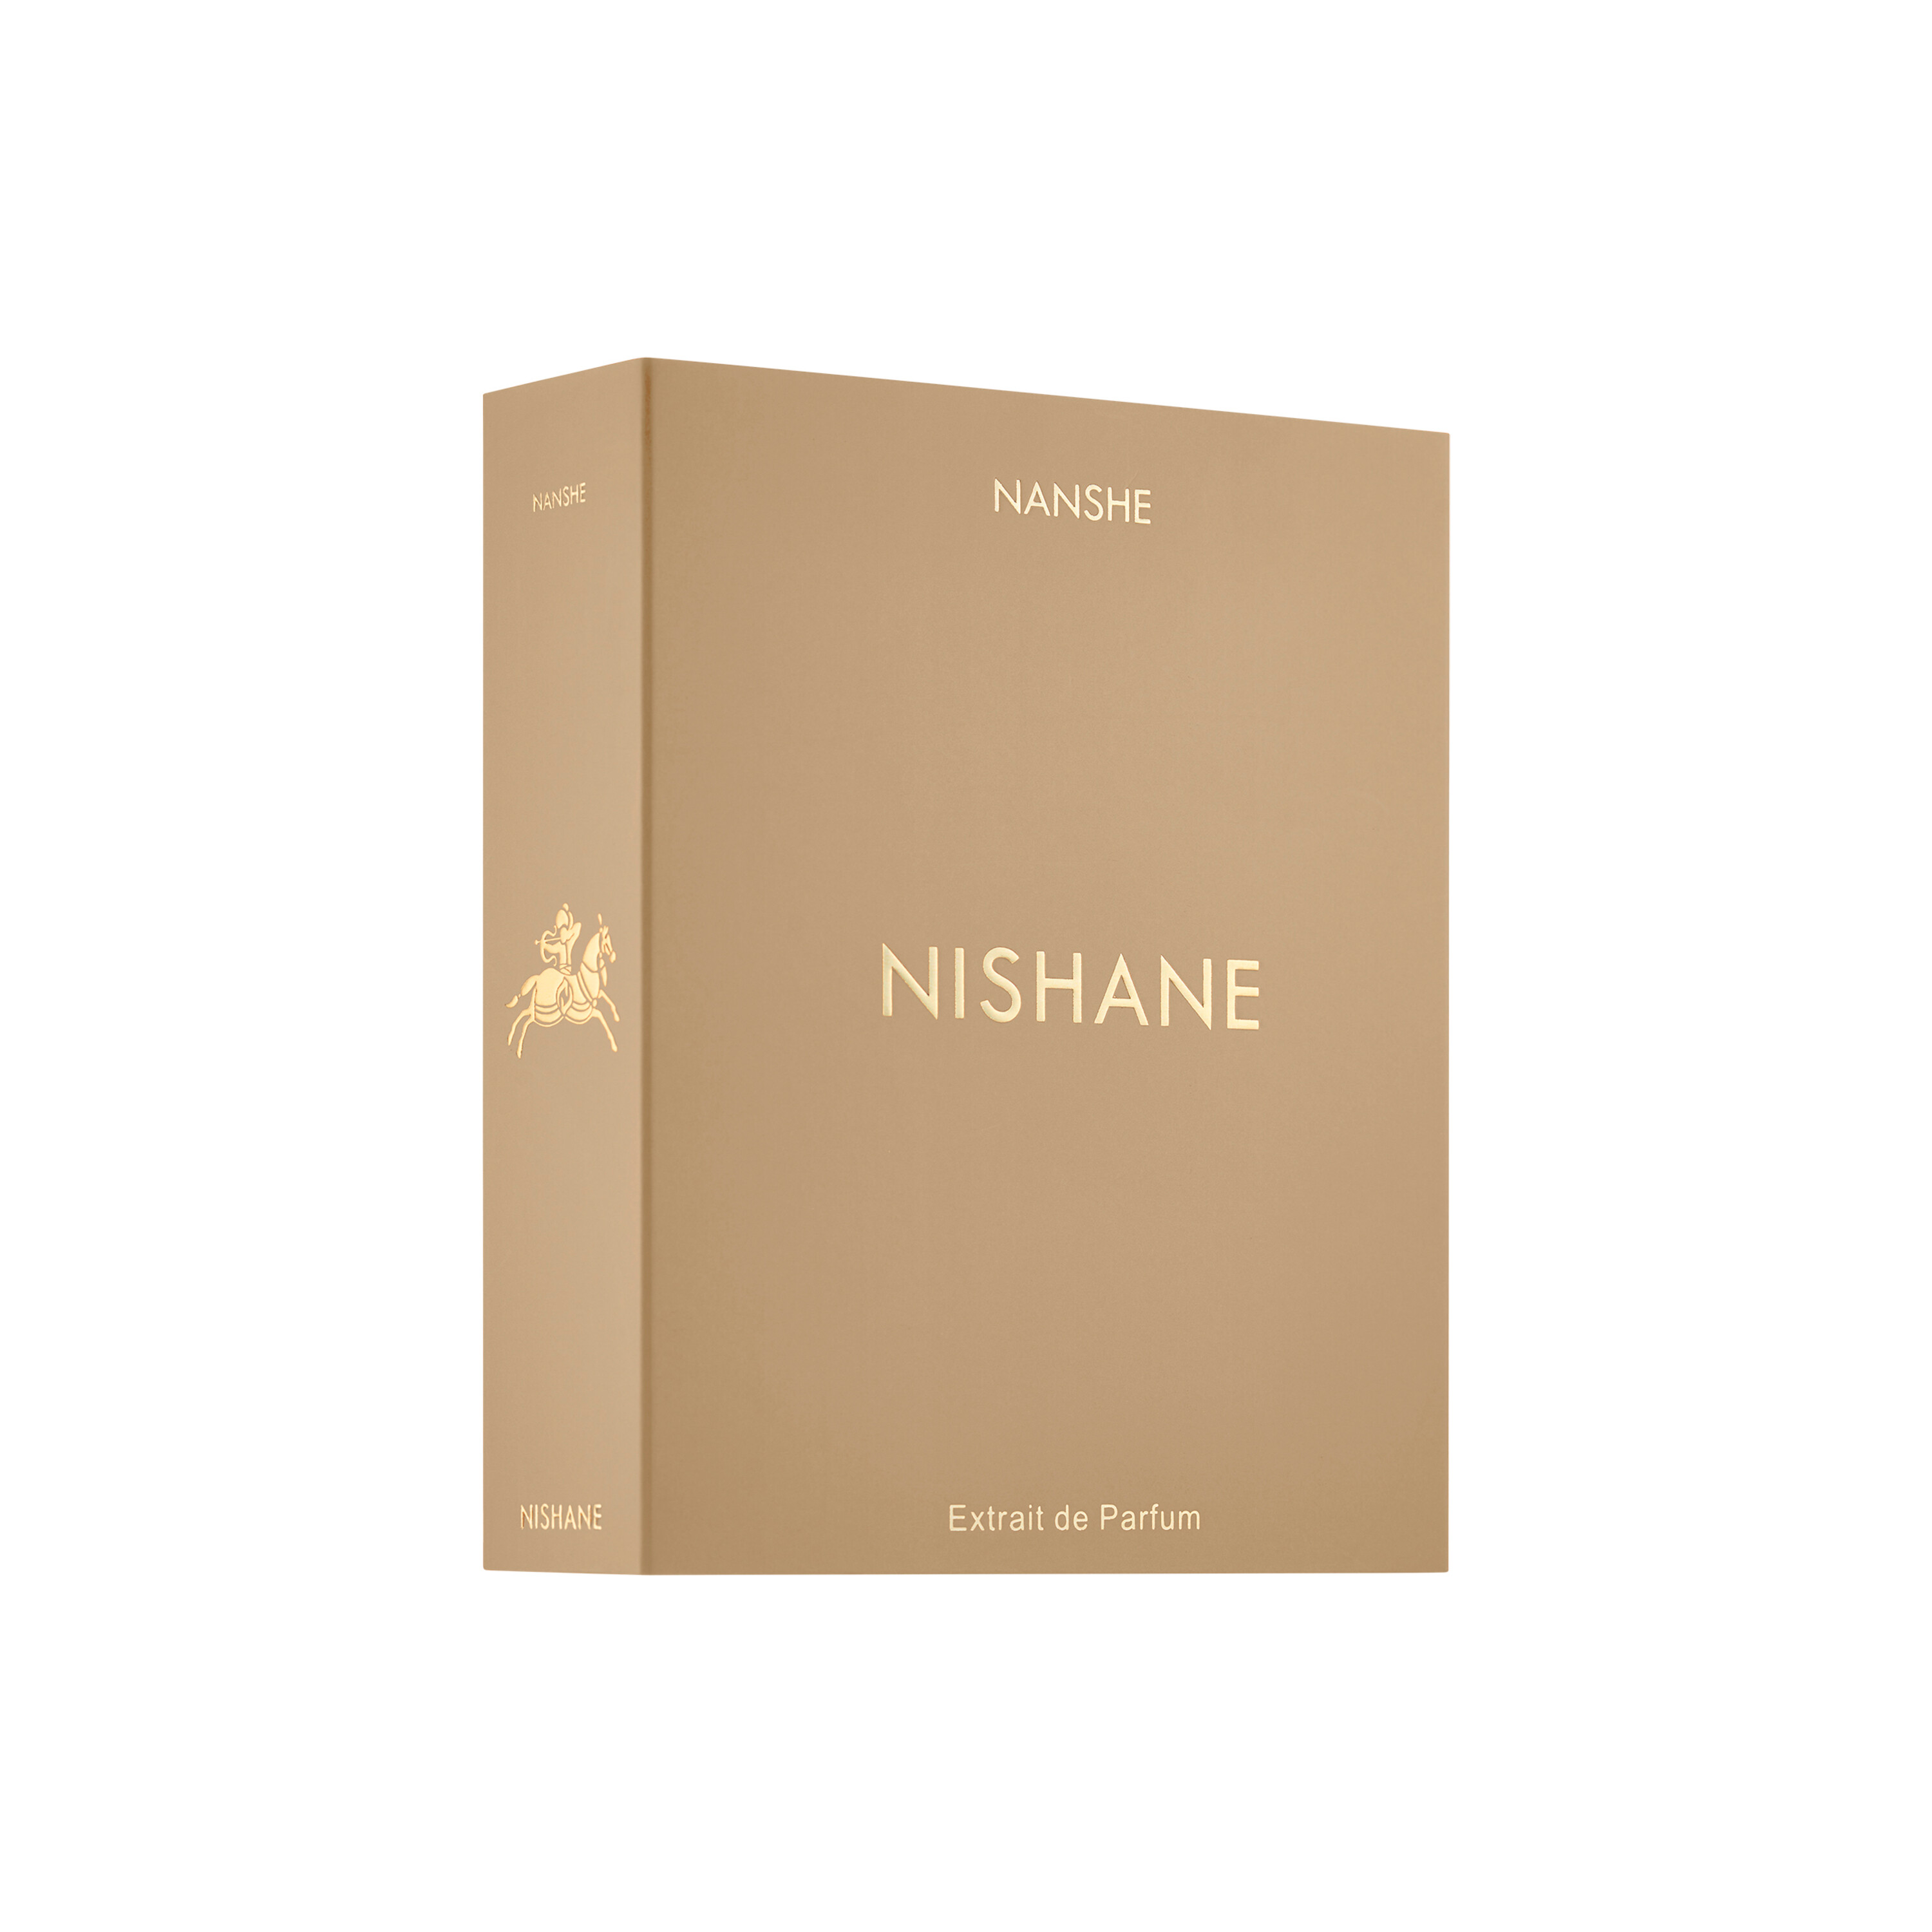 NISHANE Nanshe Extrait de Parfum 50ml